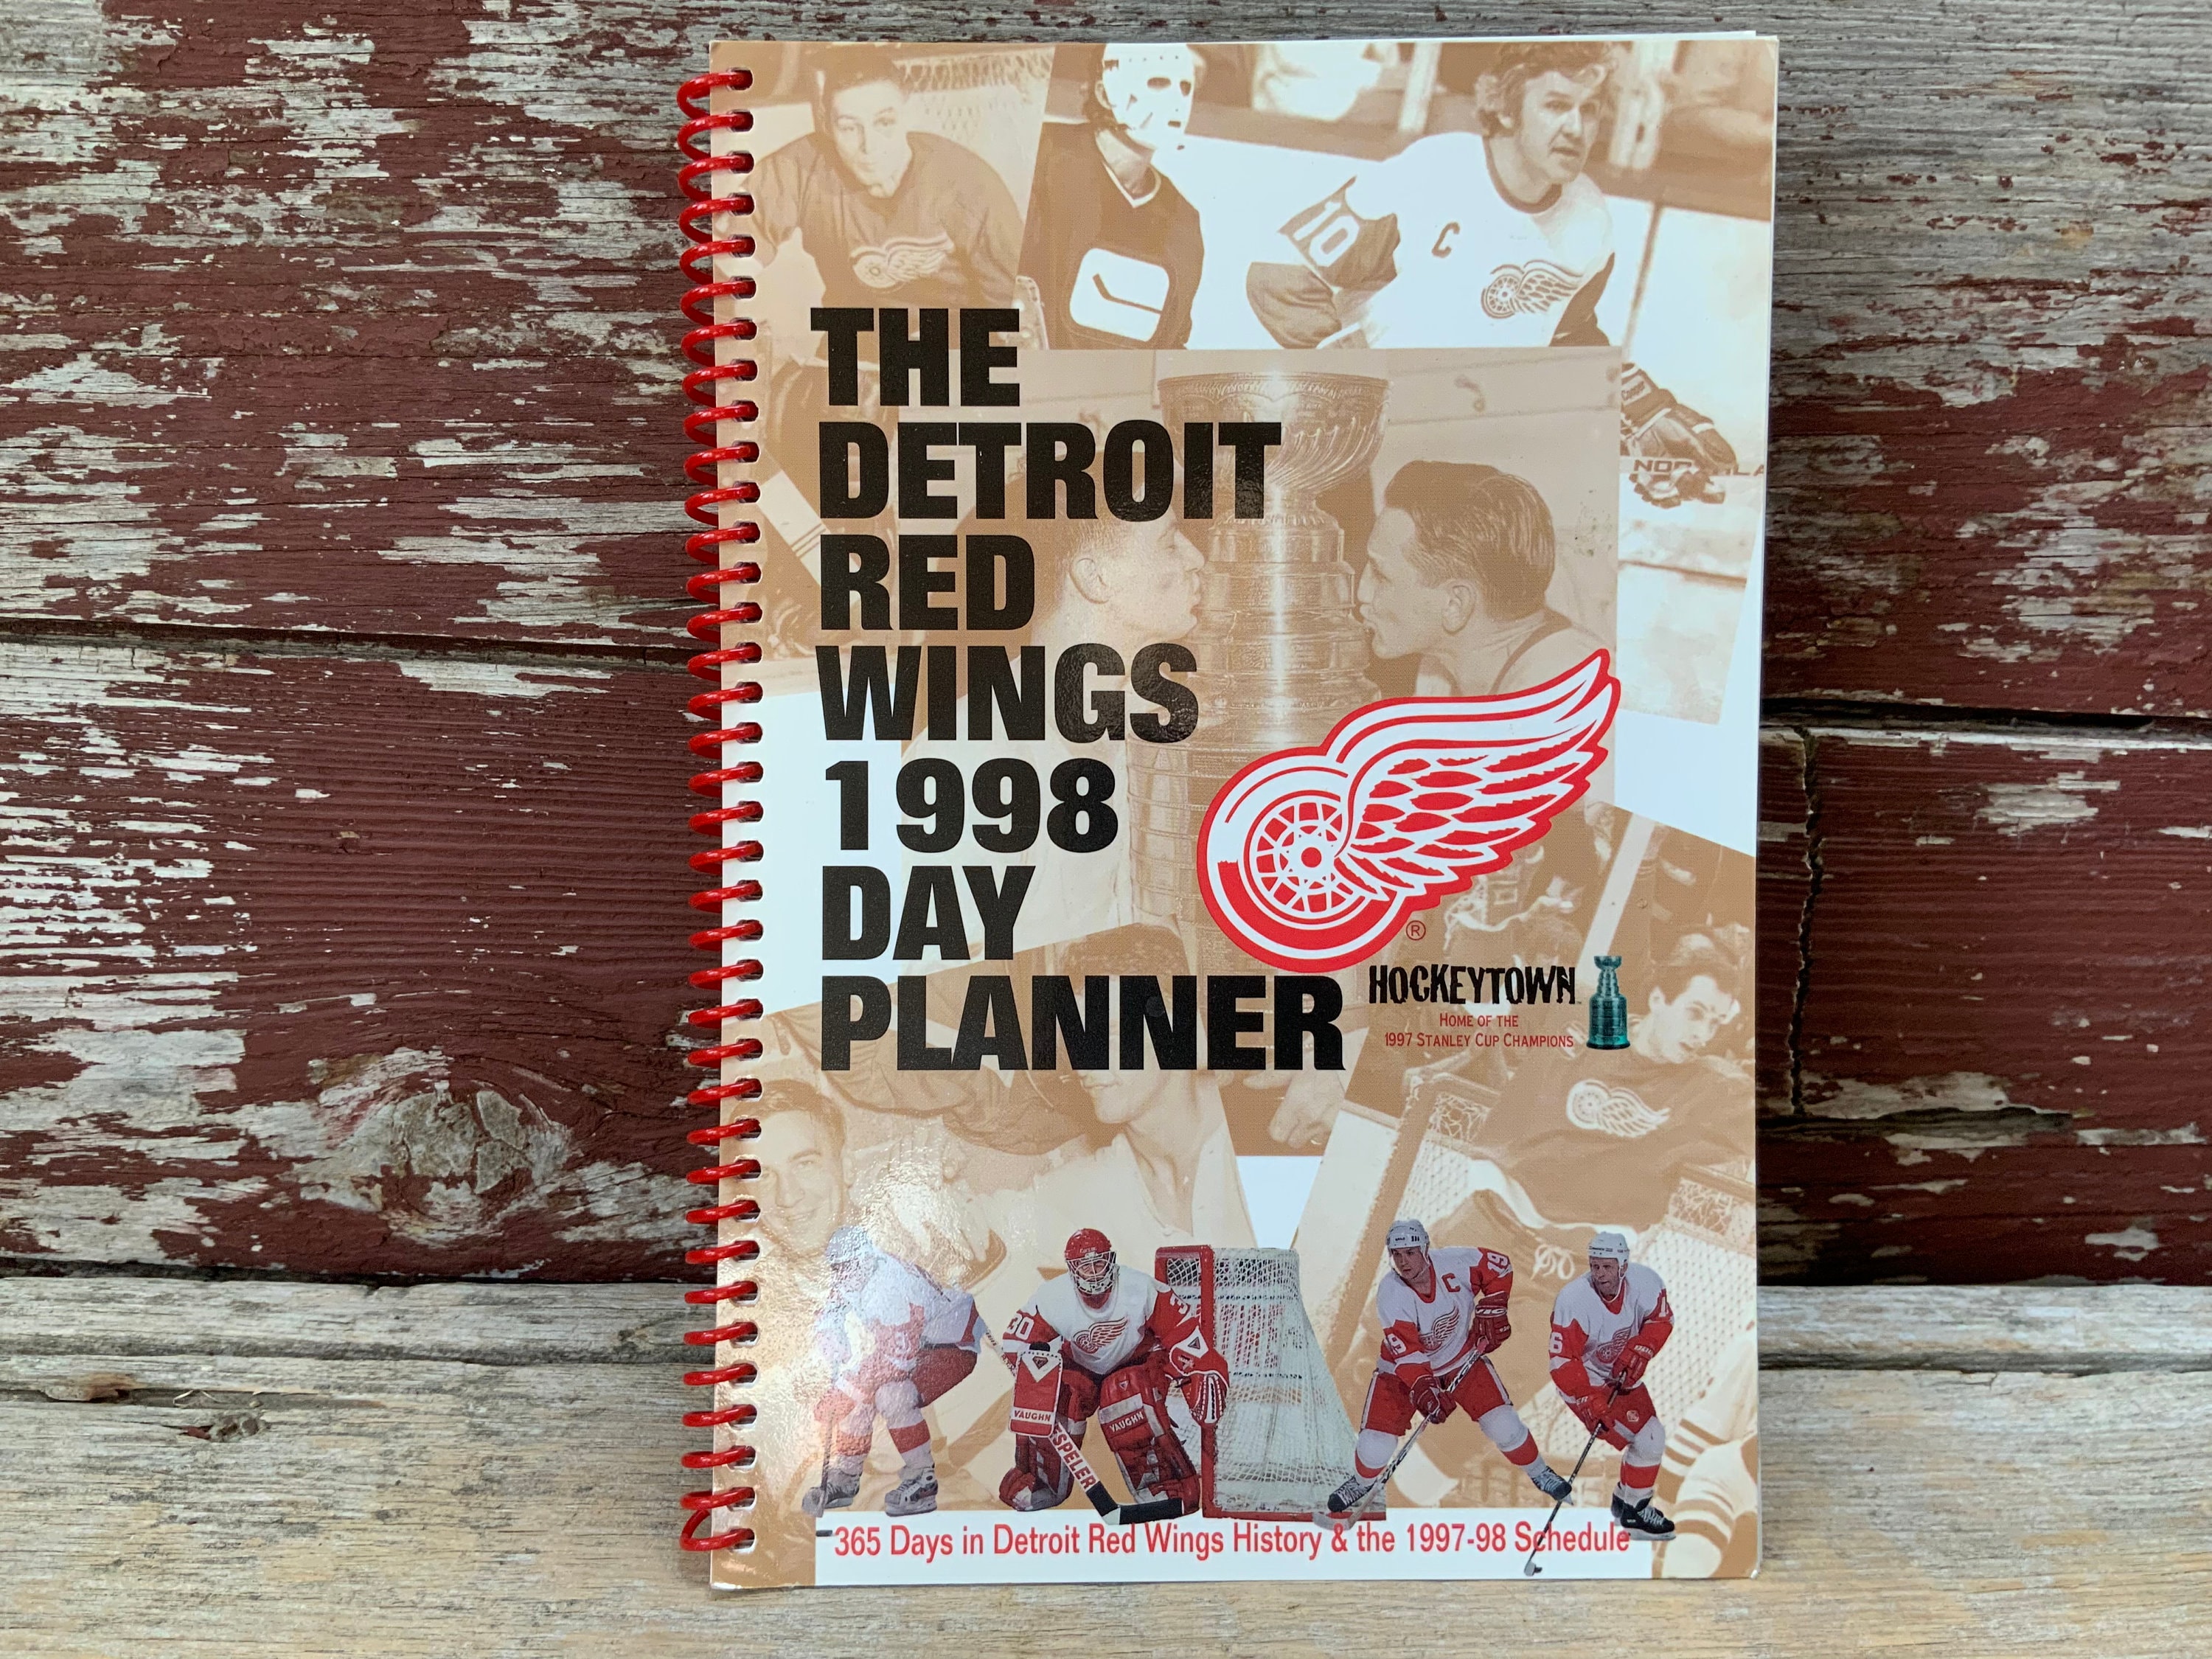 Detroit Red Wings book excerpt: Chris Osgood at home in Hockeytown